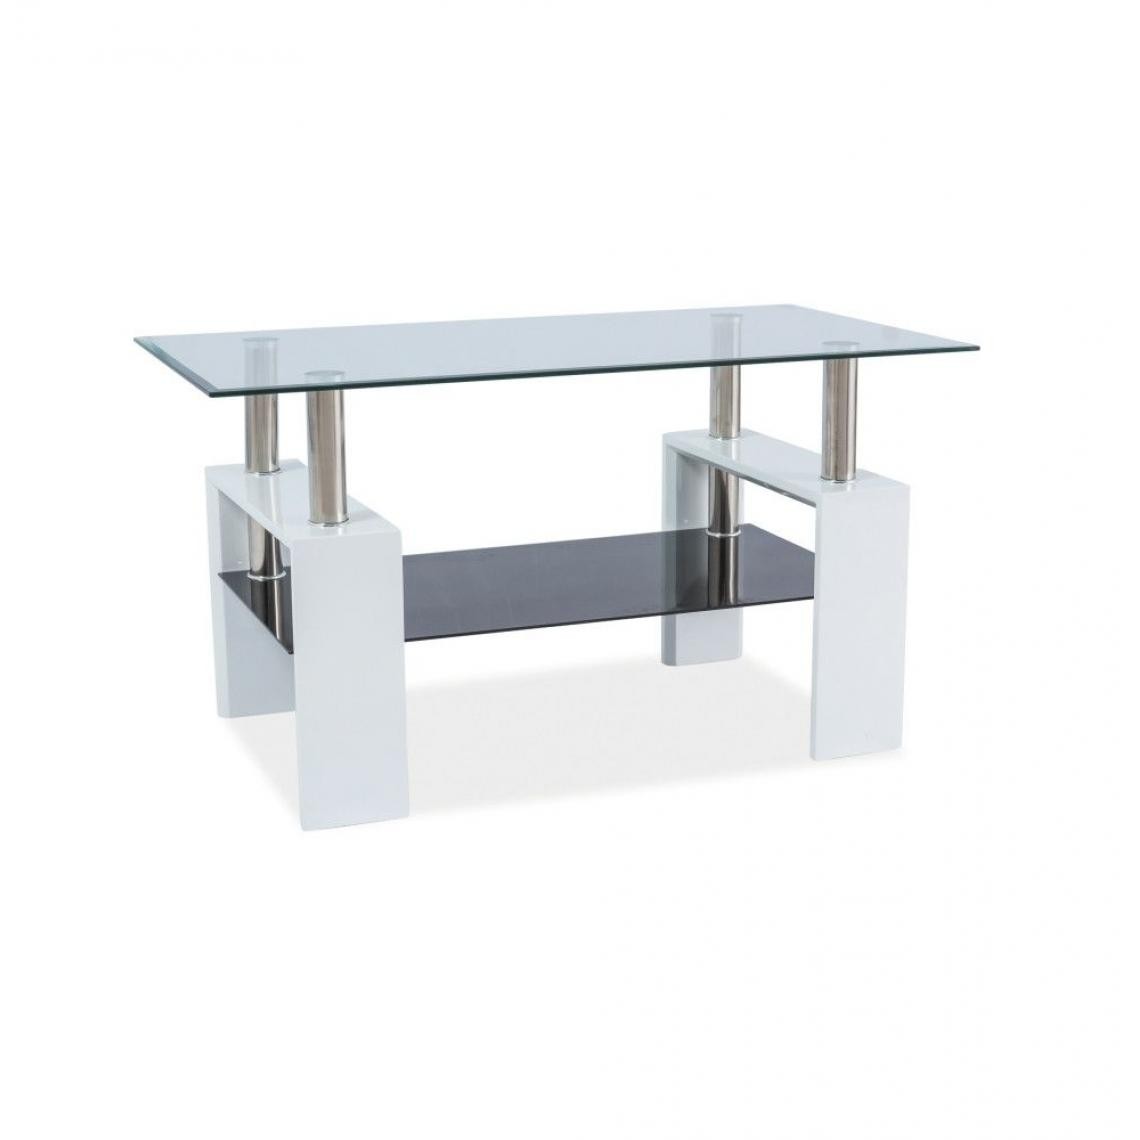 Ac-Deco - Table basse double niveau - Lisa III - 110 x 60 x 60 cm - Blanc laqué - Tables basses